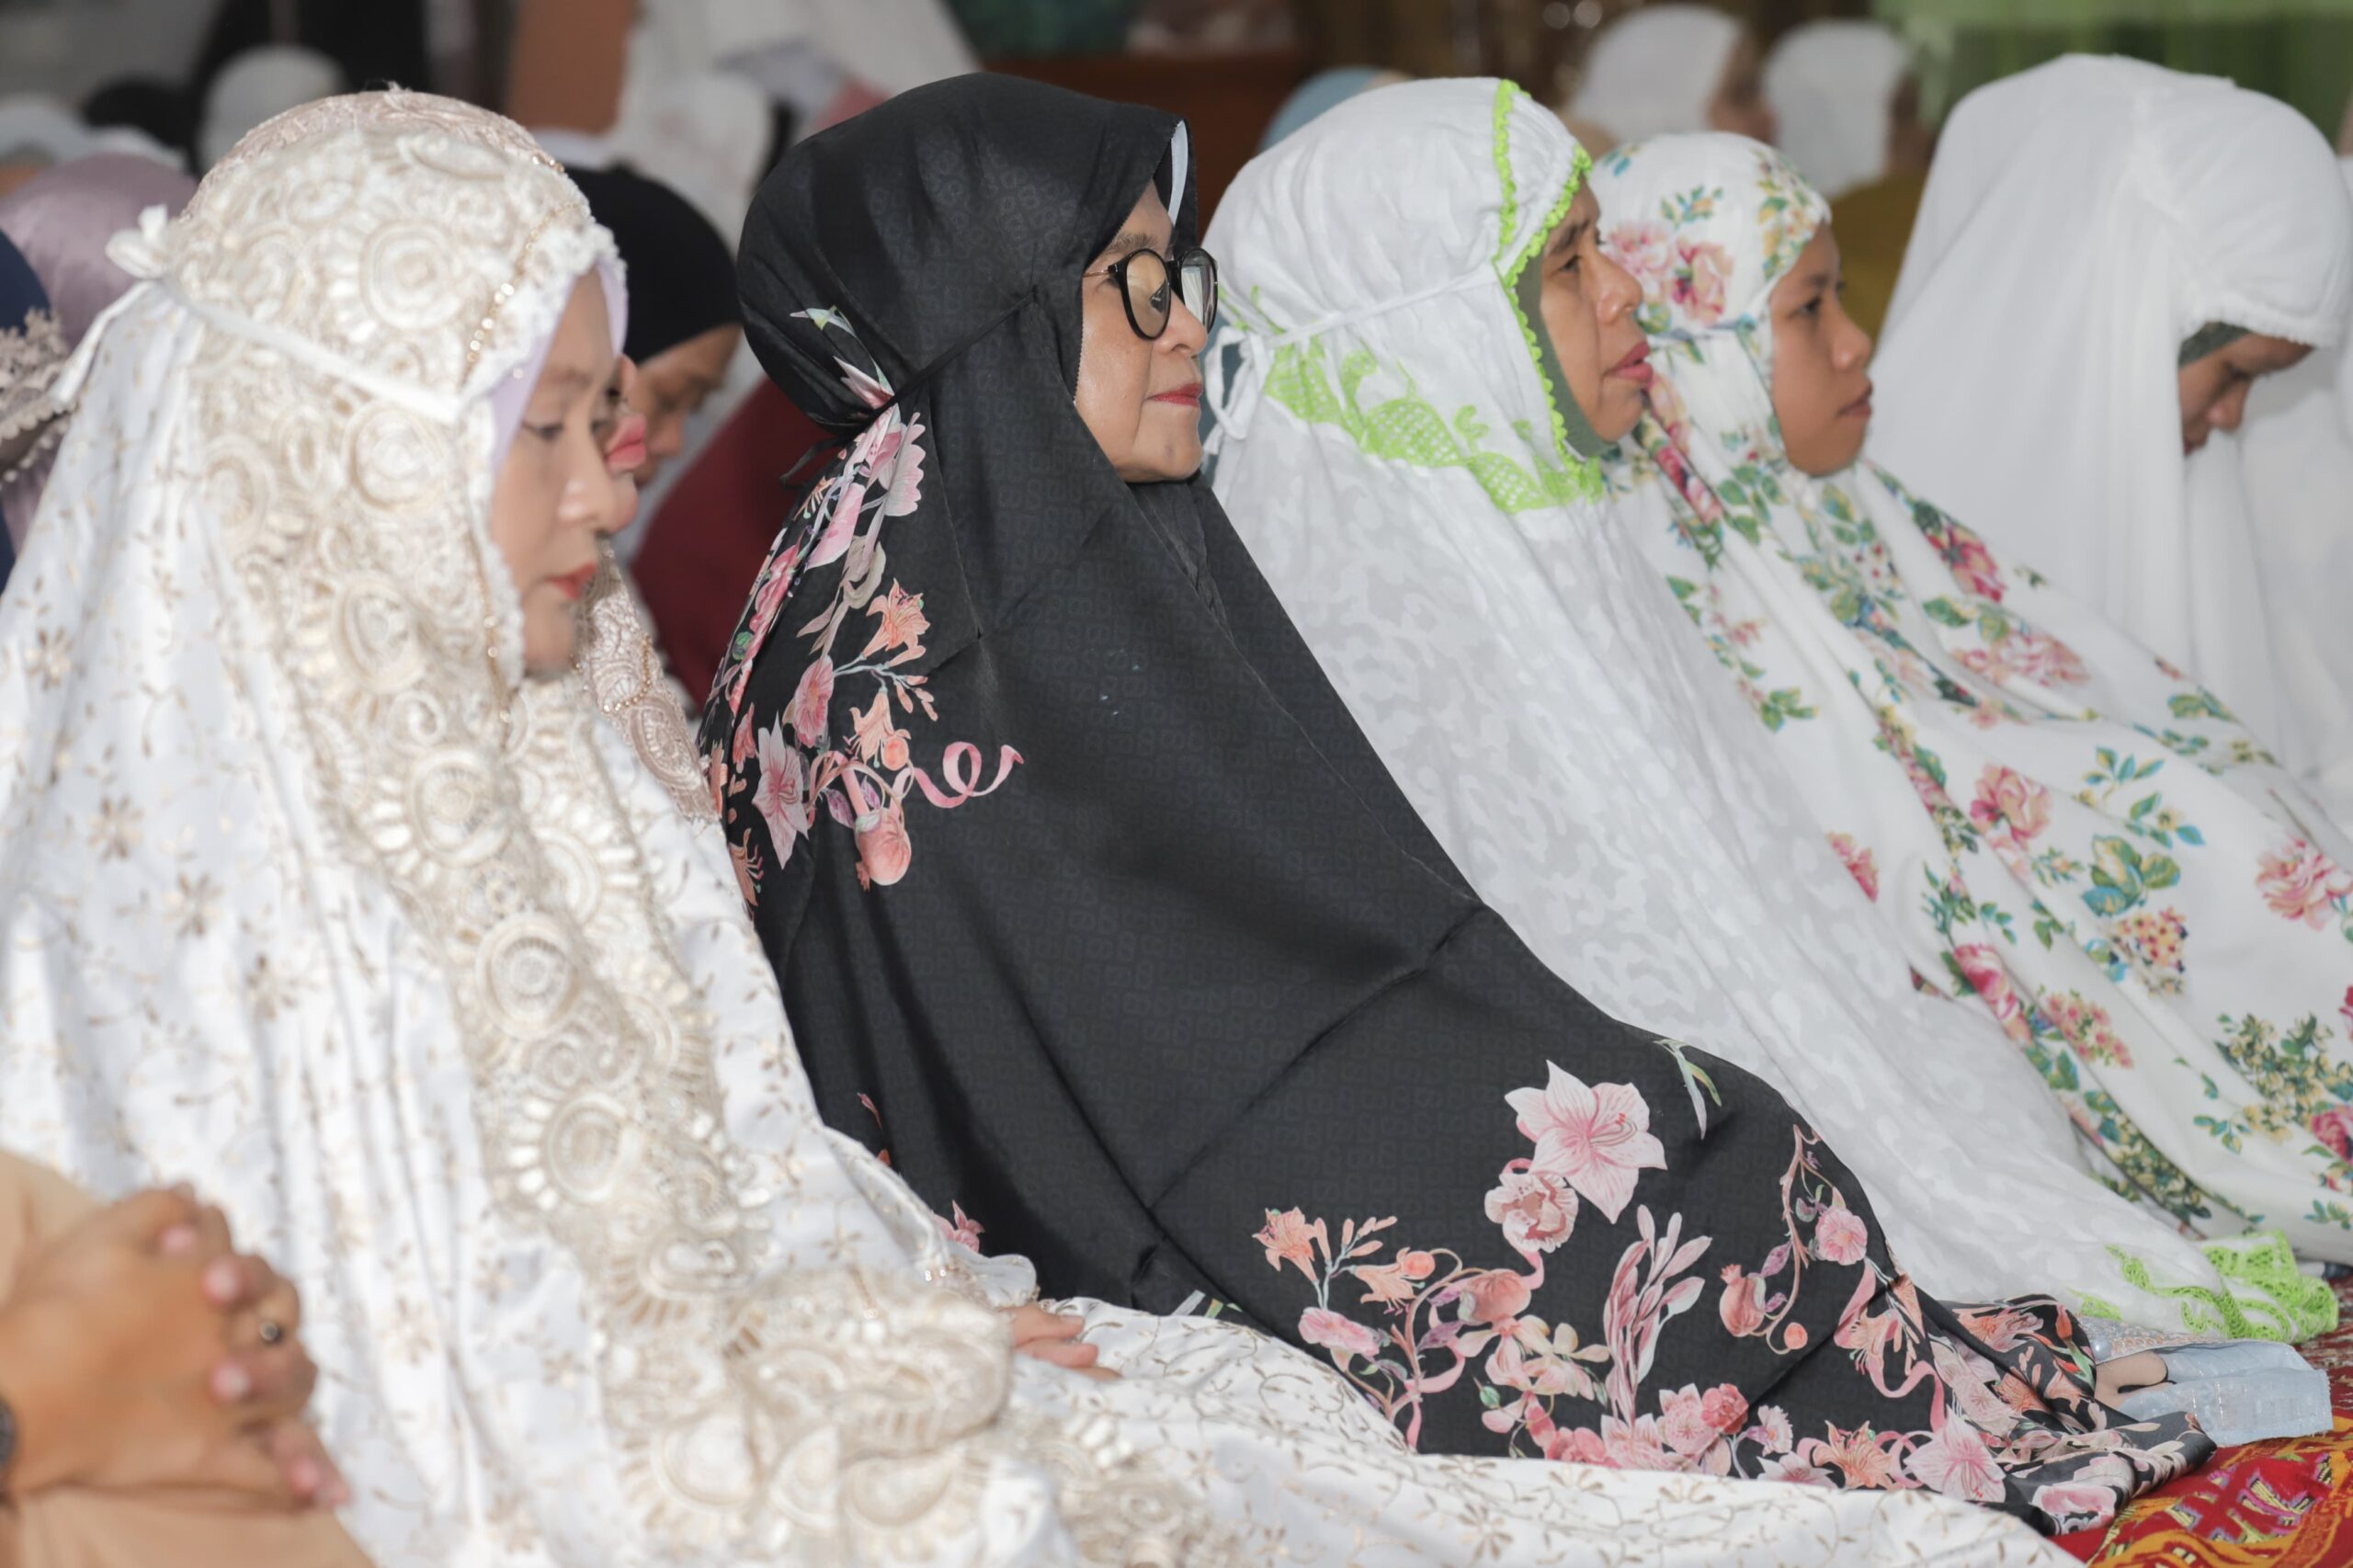 Wali Kota Pematangsiantar sholat Ied di Masjid Raya bersama masyarakat. (Nawasenanews/Ist)